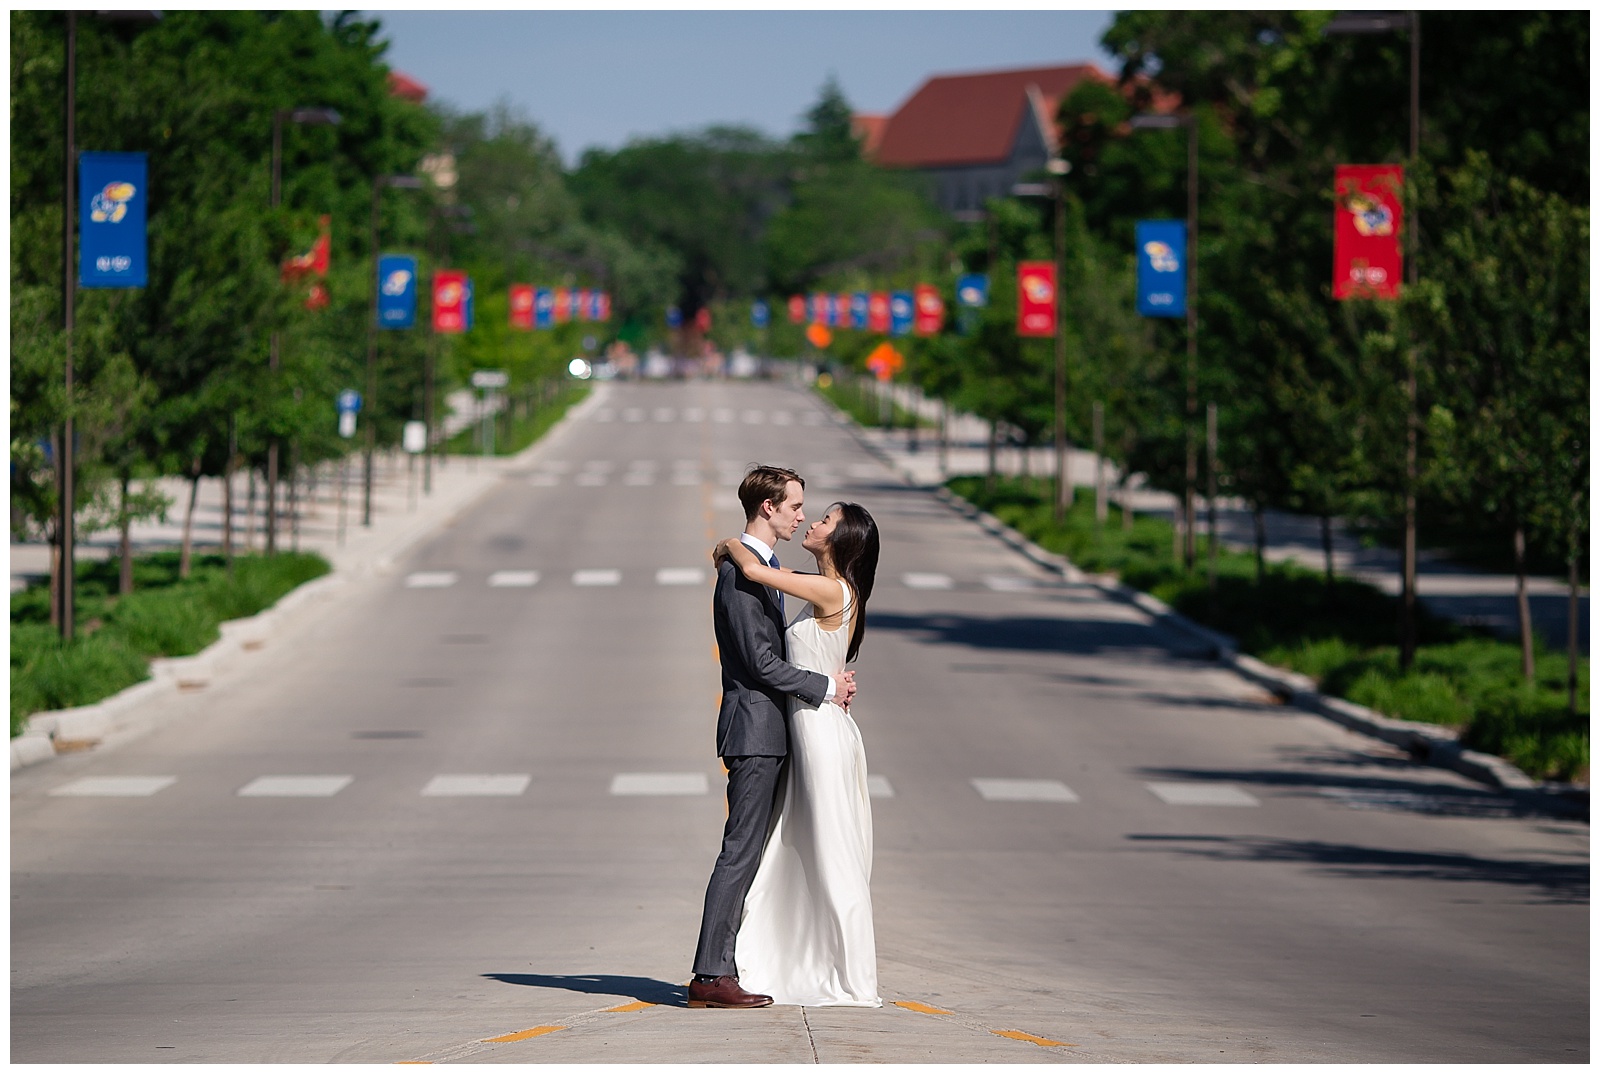 Wedding photography at the University of Kansas in Lawrence, Kansas.